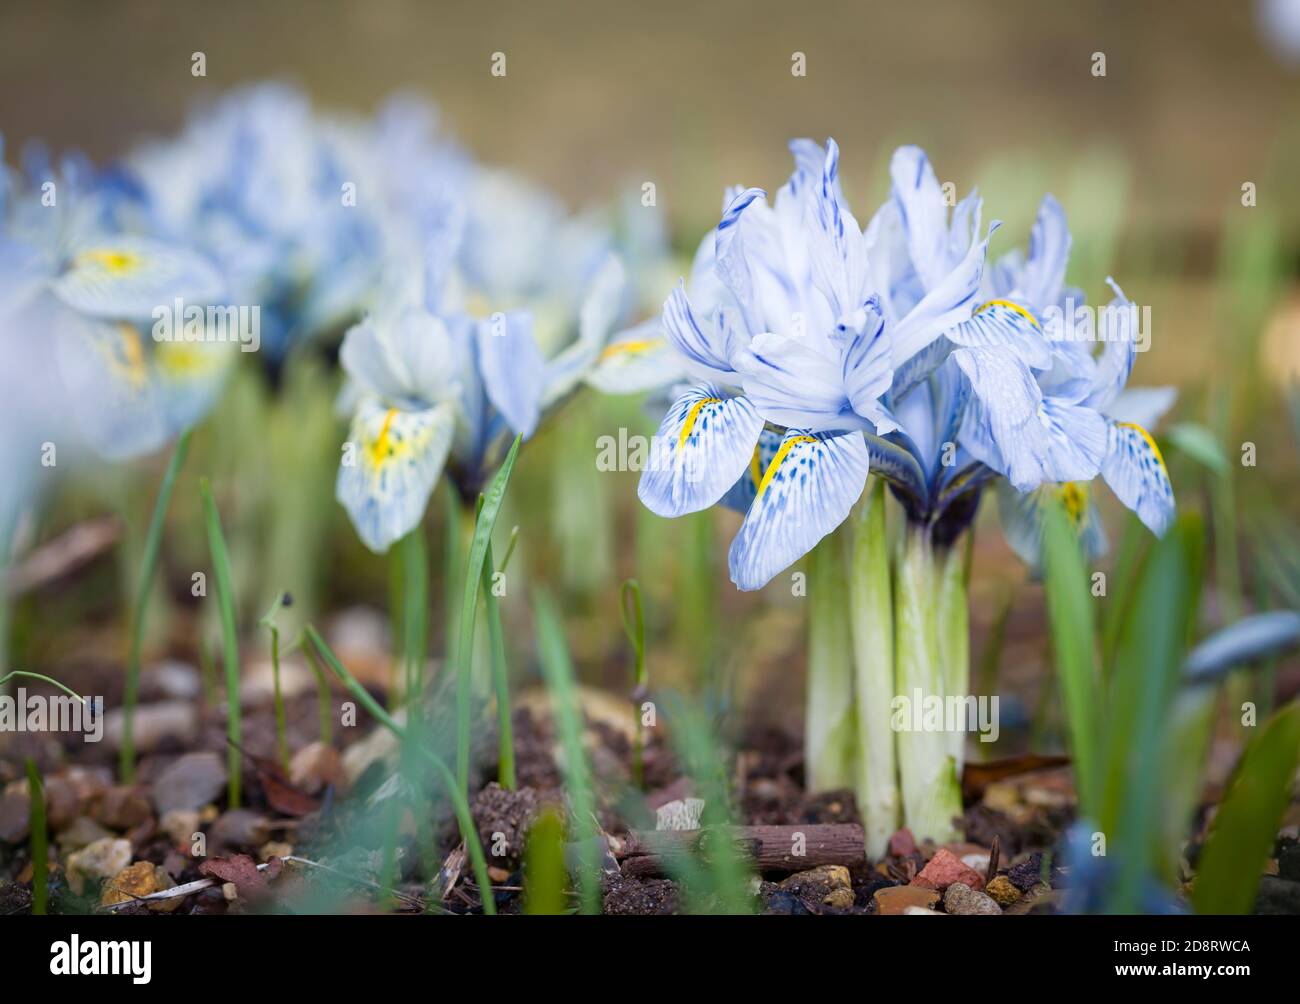 Dwarf iris flowers (Katharine Hodgkin) growing in a garden border or flower bed, UK Stock Photo